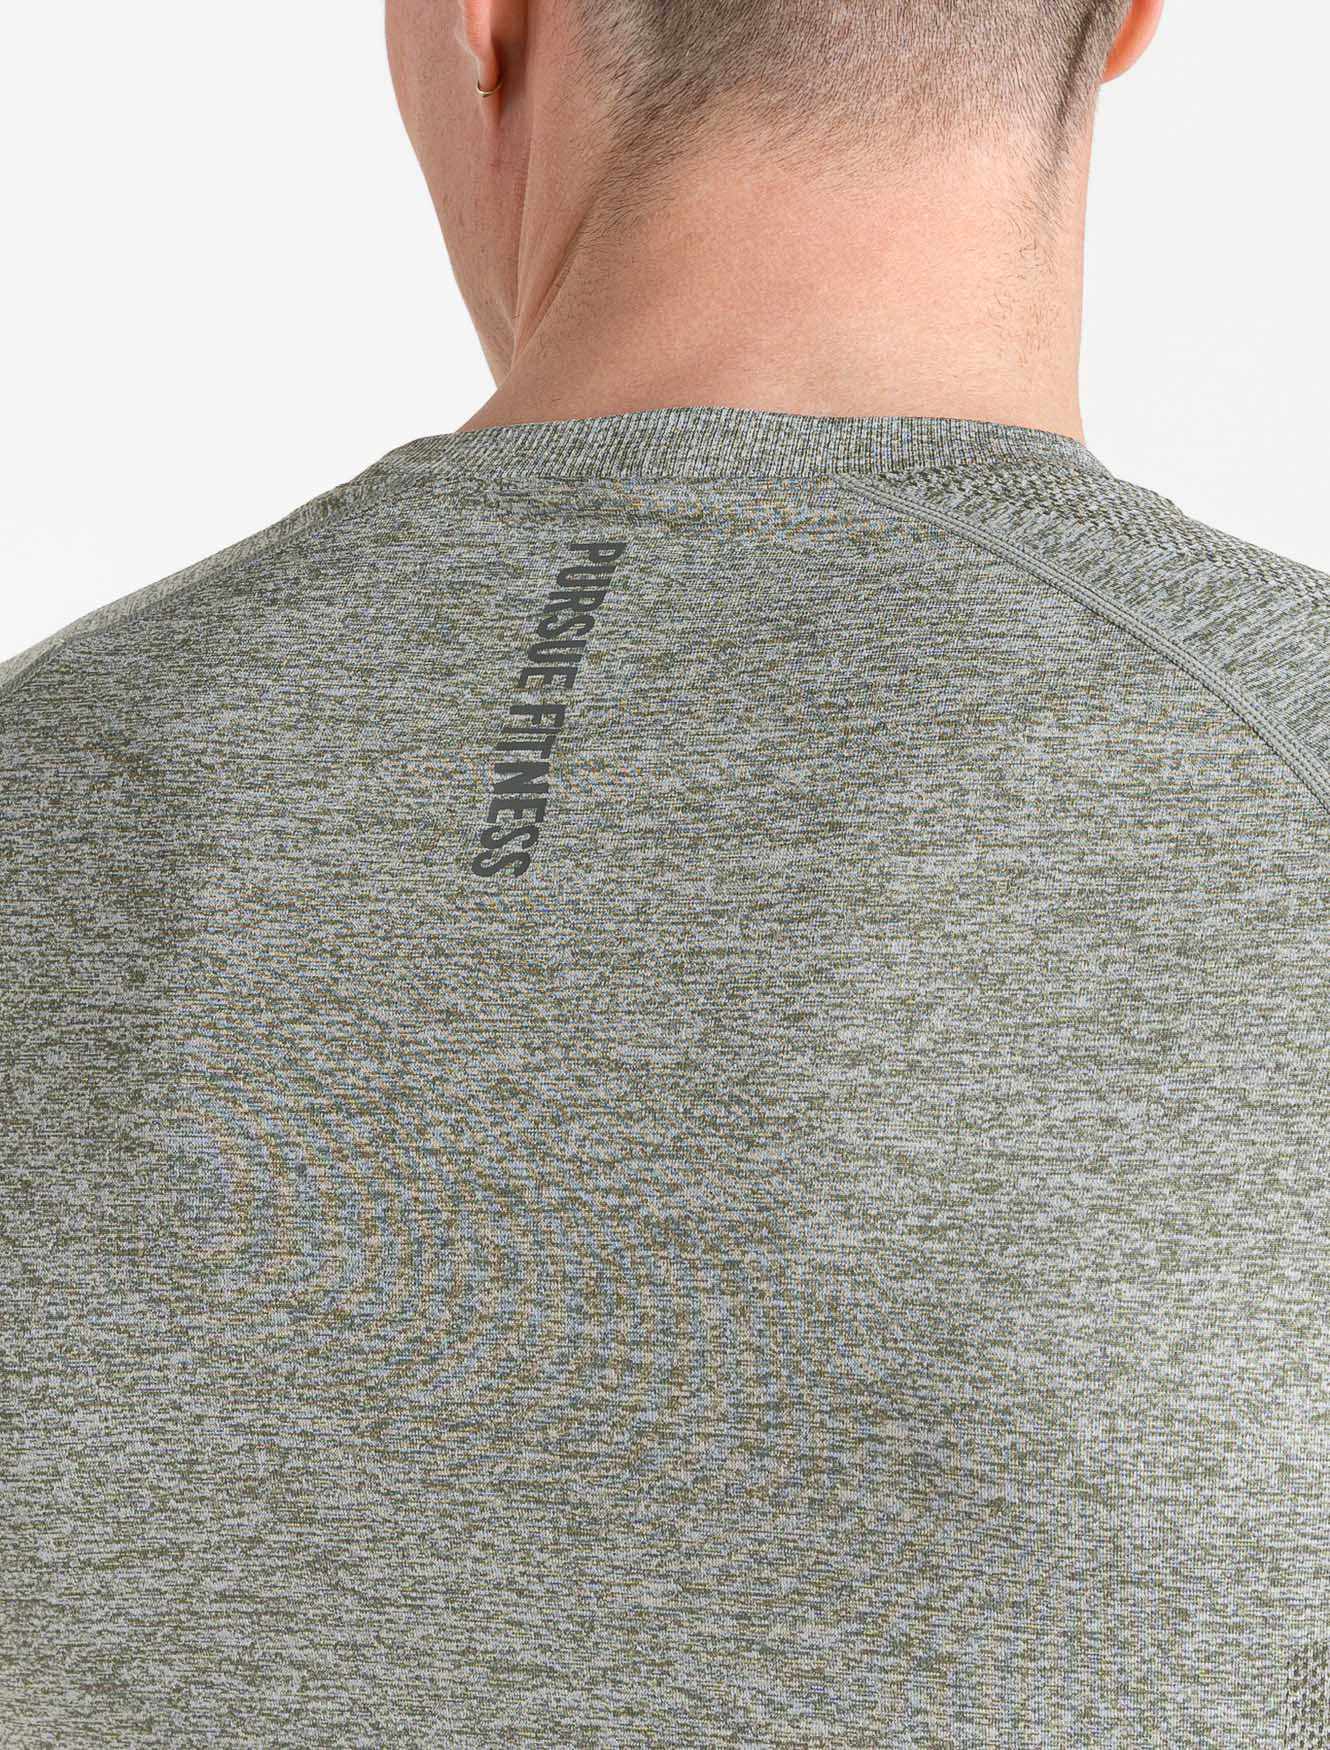 Intensity Seamless T-shirt / Khaki Marl Pursue Fitness 5